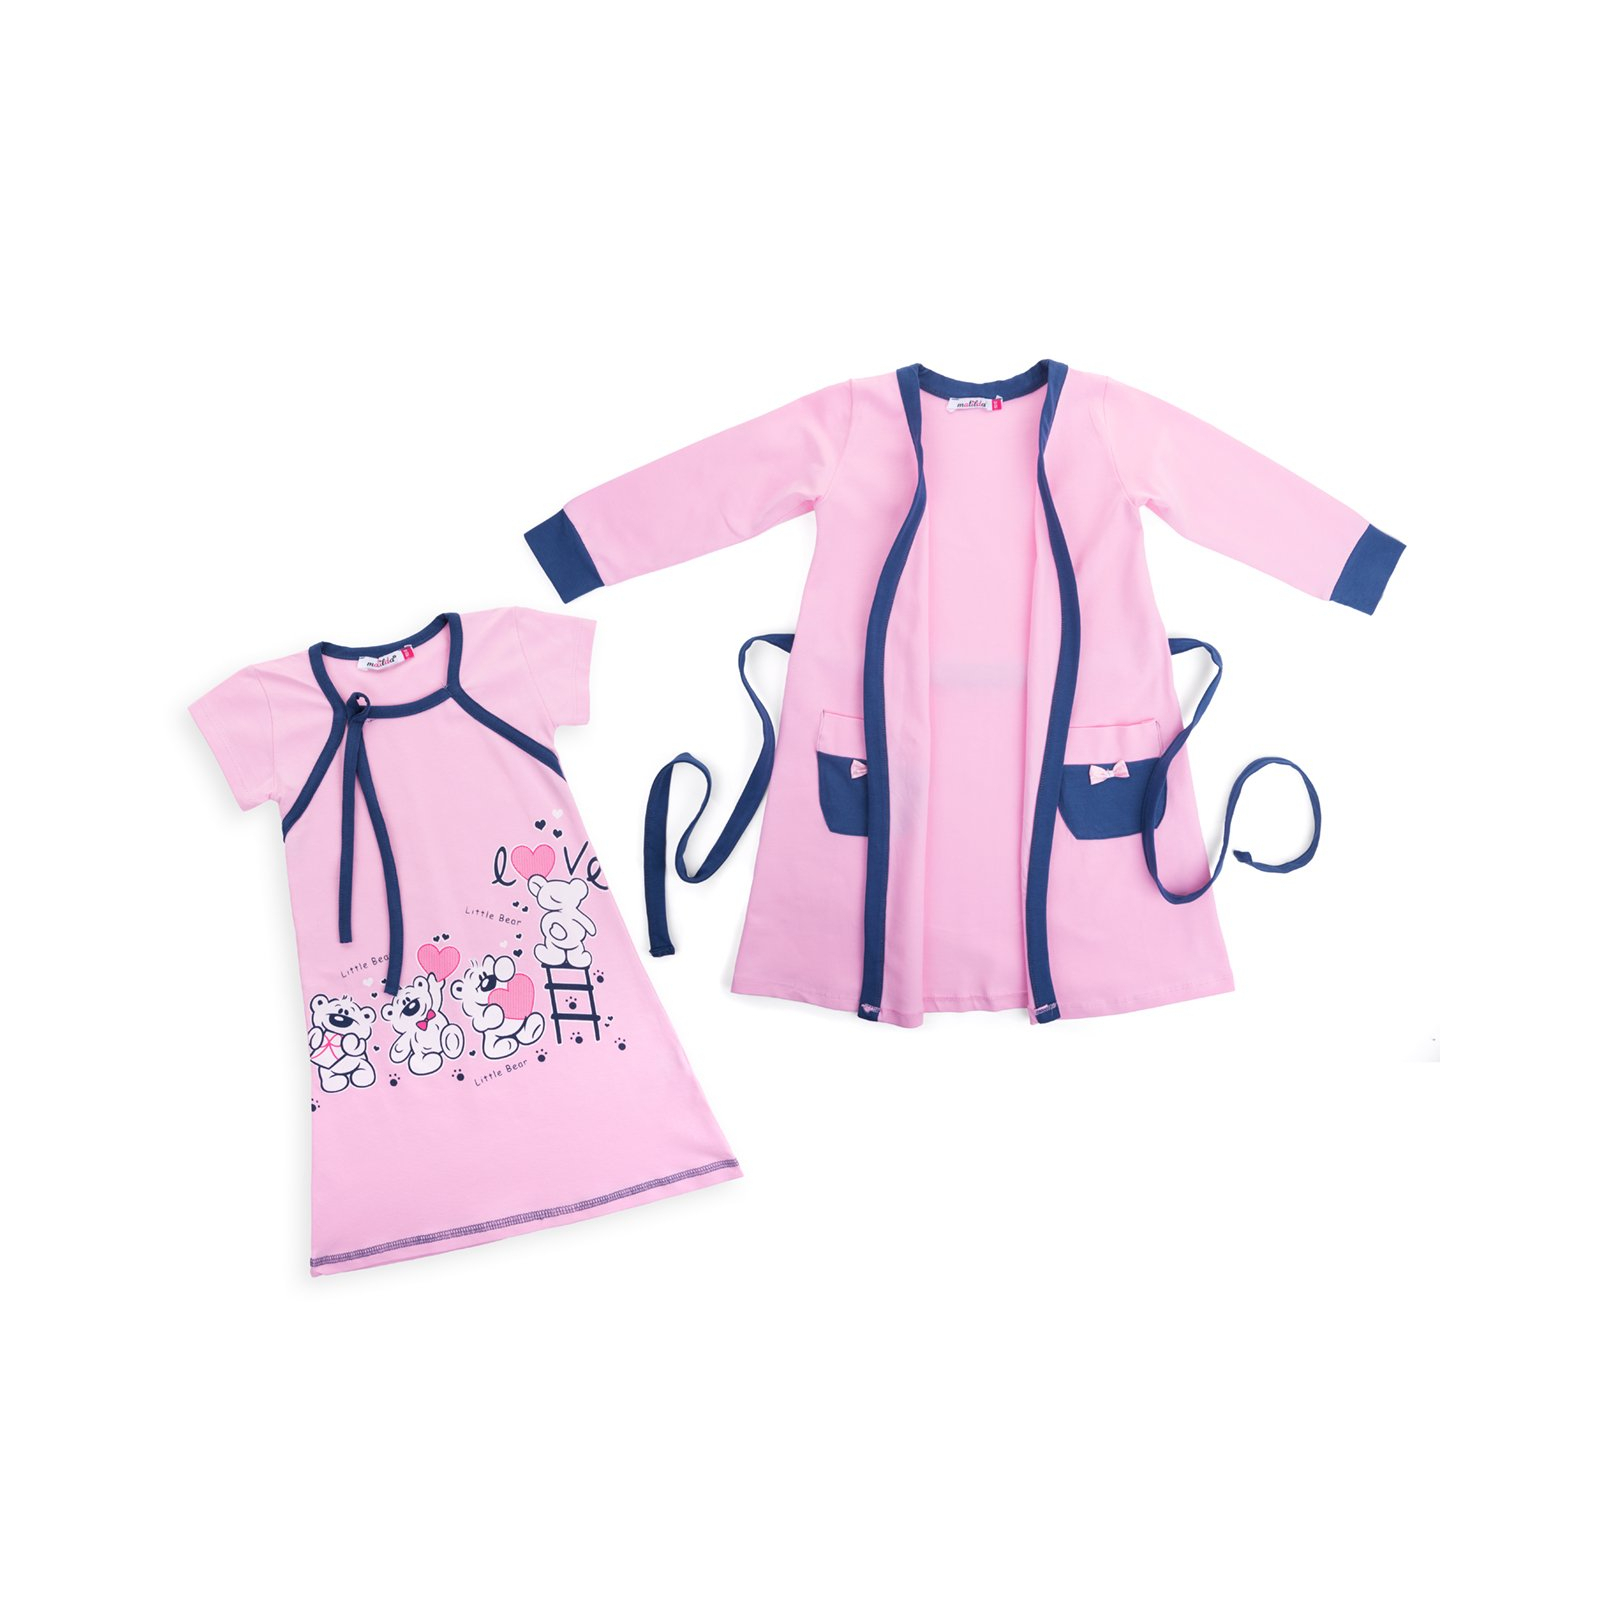 Пижама Matilda и халат с мишками "Love" (7445-152G-pink)